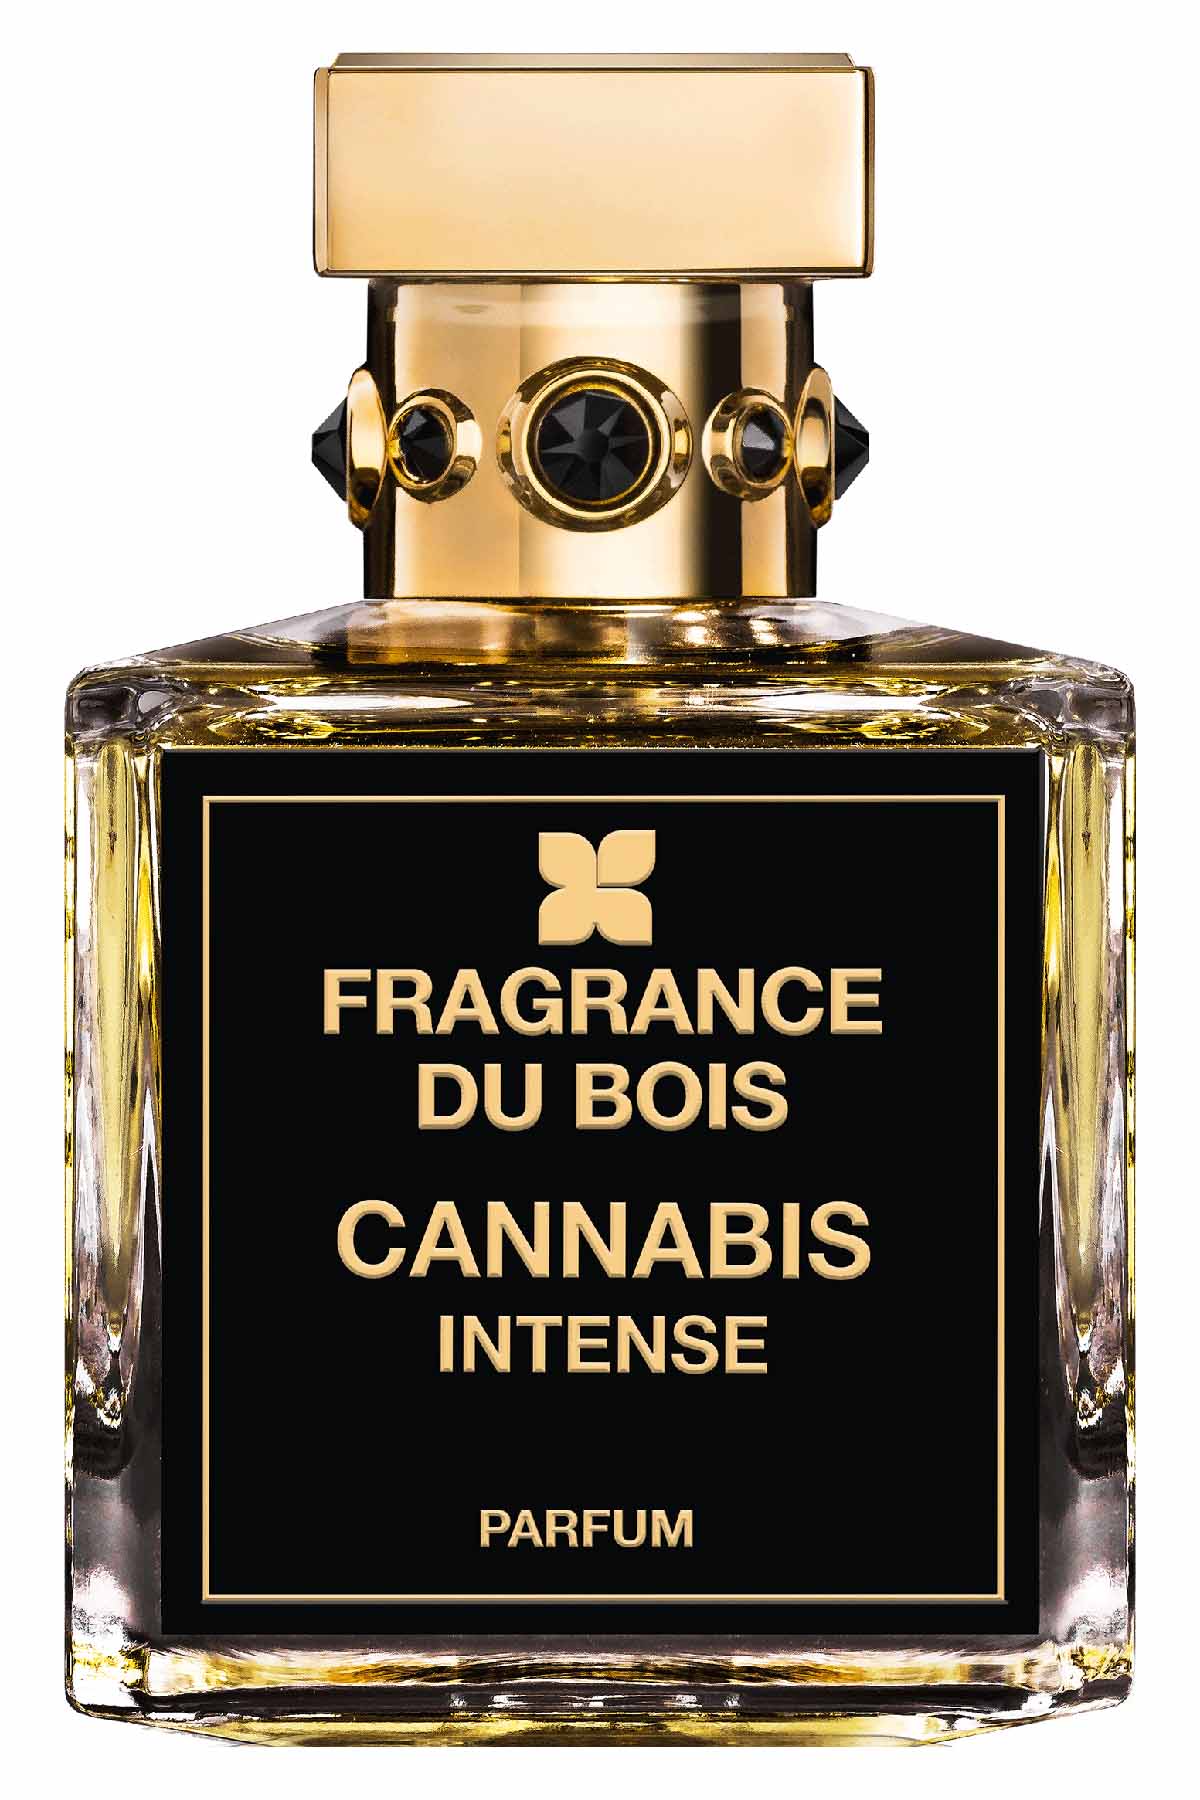 Fragrance Du Bois Cannabis Intense Parfum